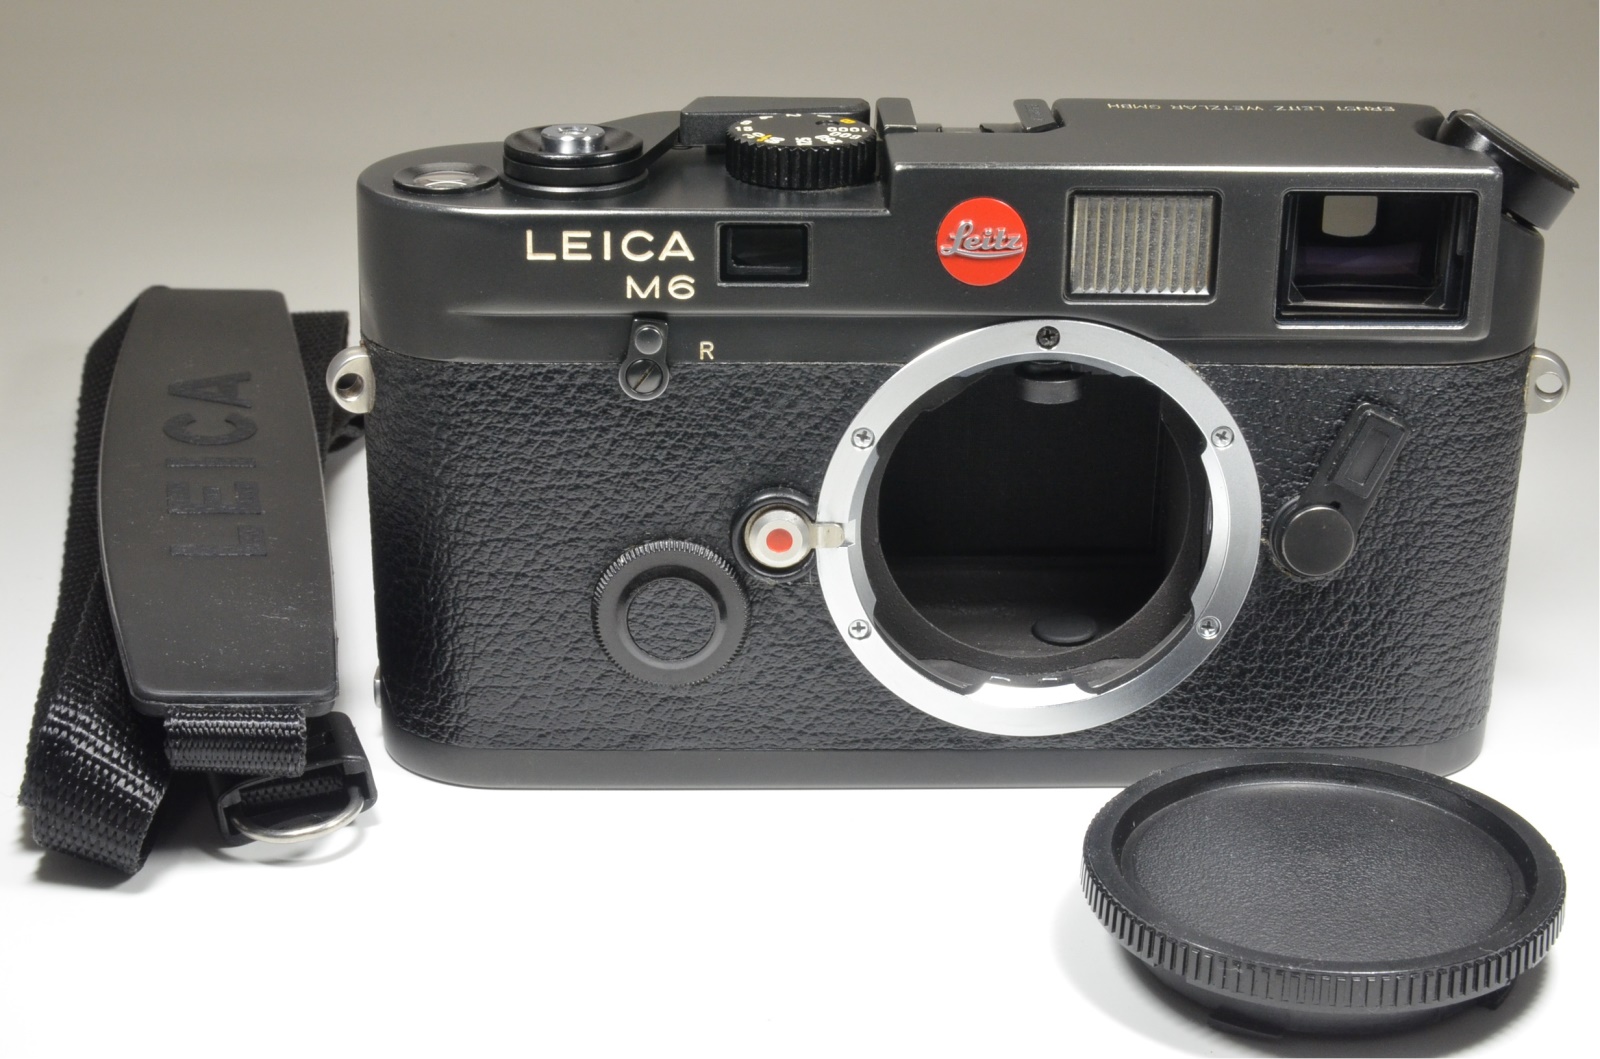 leica m6 0.72 black rangefinder no.1658937 year 1984 the camera cla'd recently